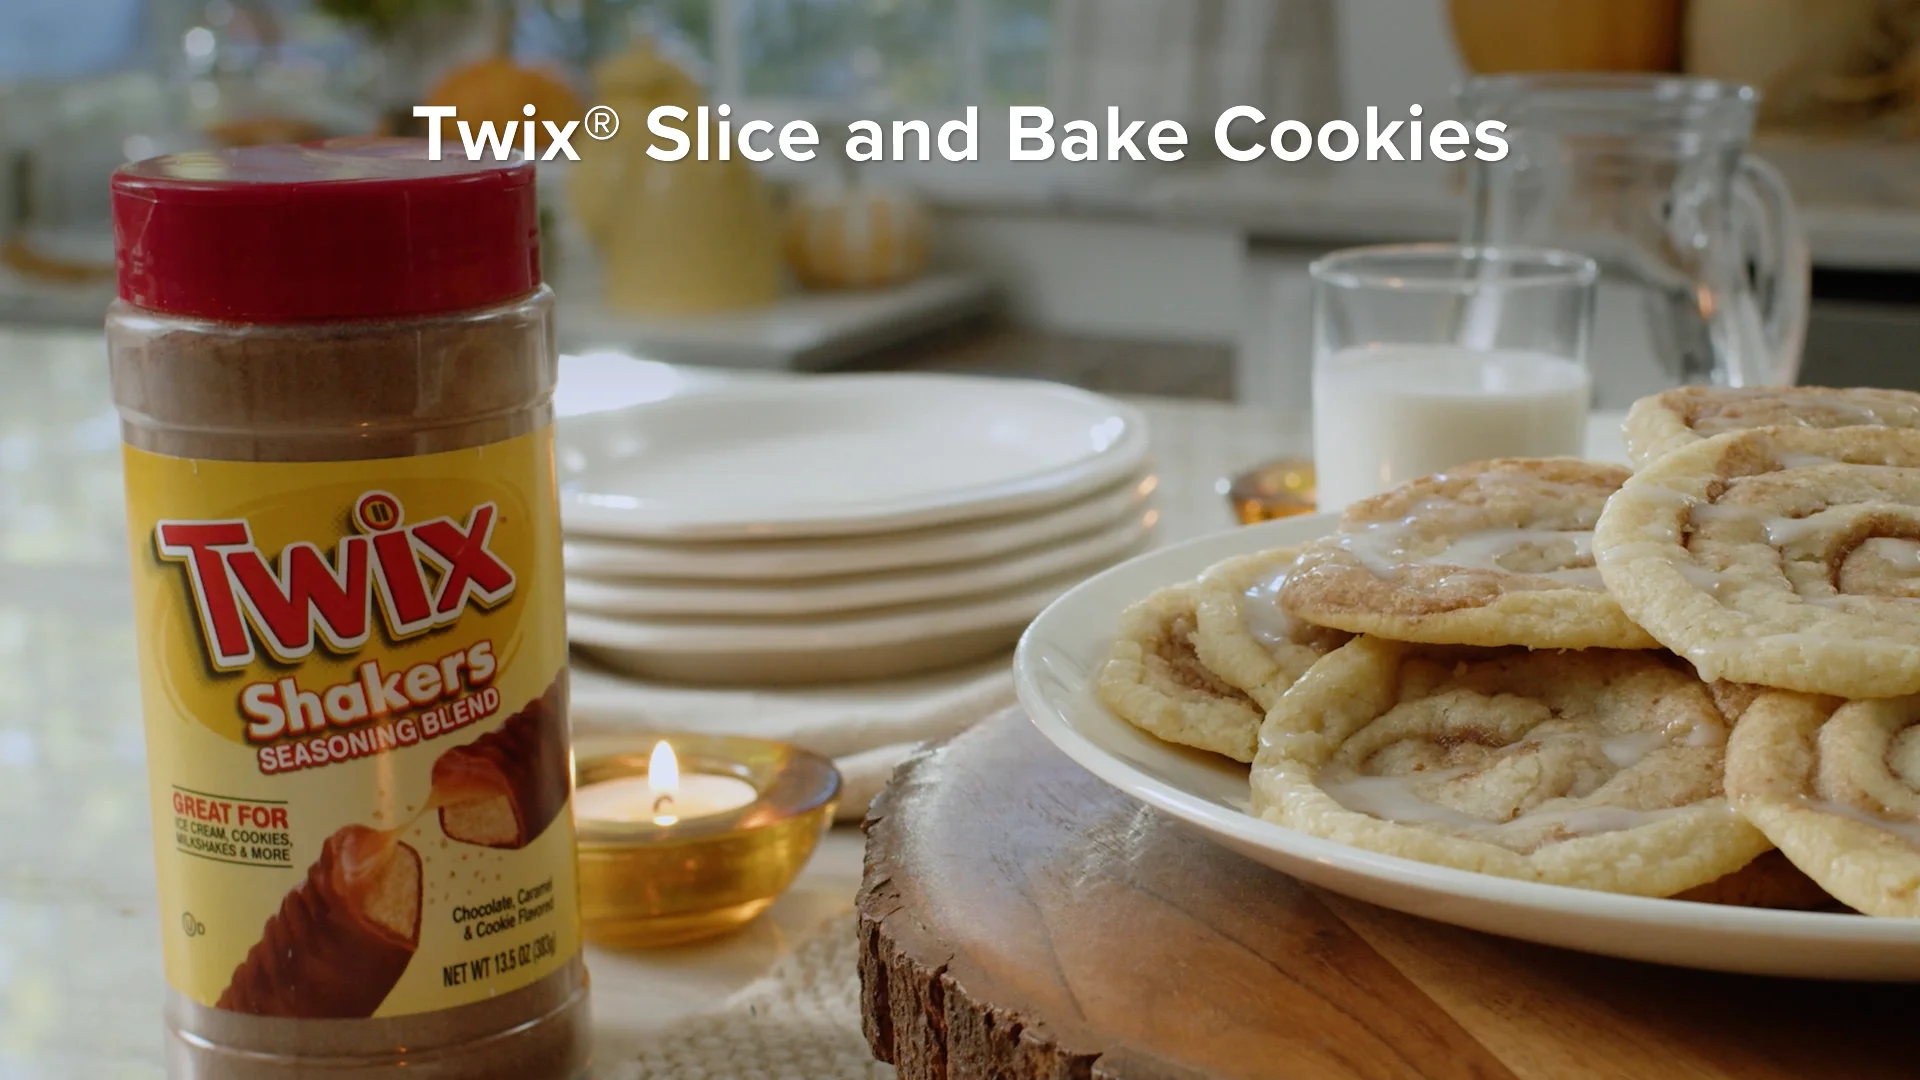 Twix® Slice and Bake Cookies on Vimeo